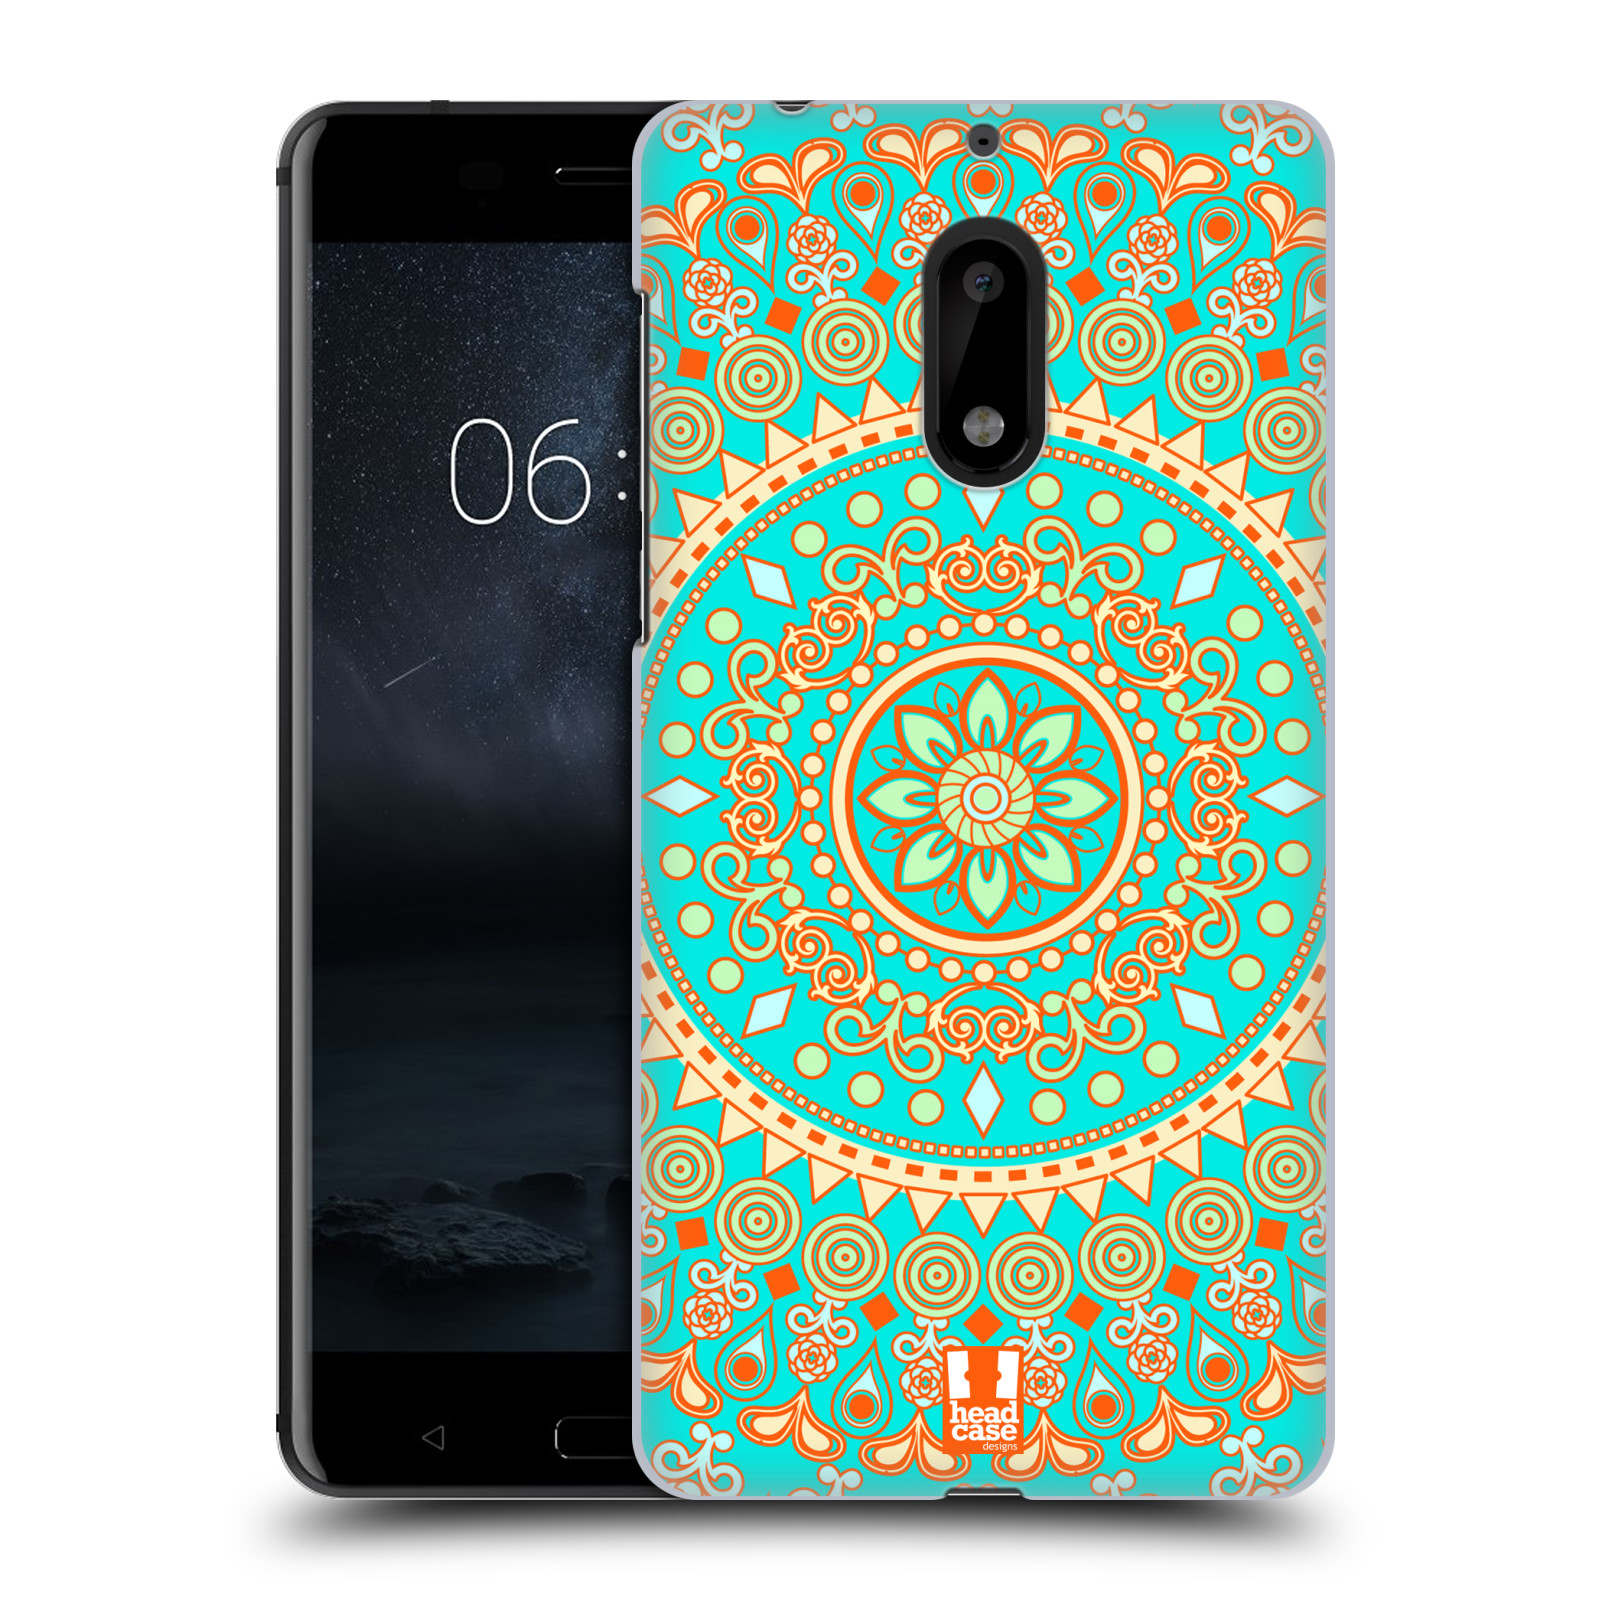 HEAD CASE plastový obal na mobil Nokia 6 vzor Indie Mandala slunce barevný motiv TYRKYSOVÁ, ZELENÁ